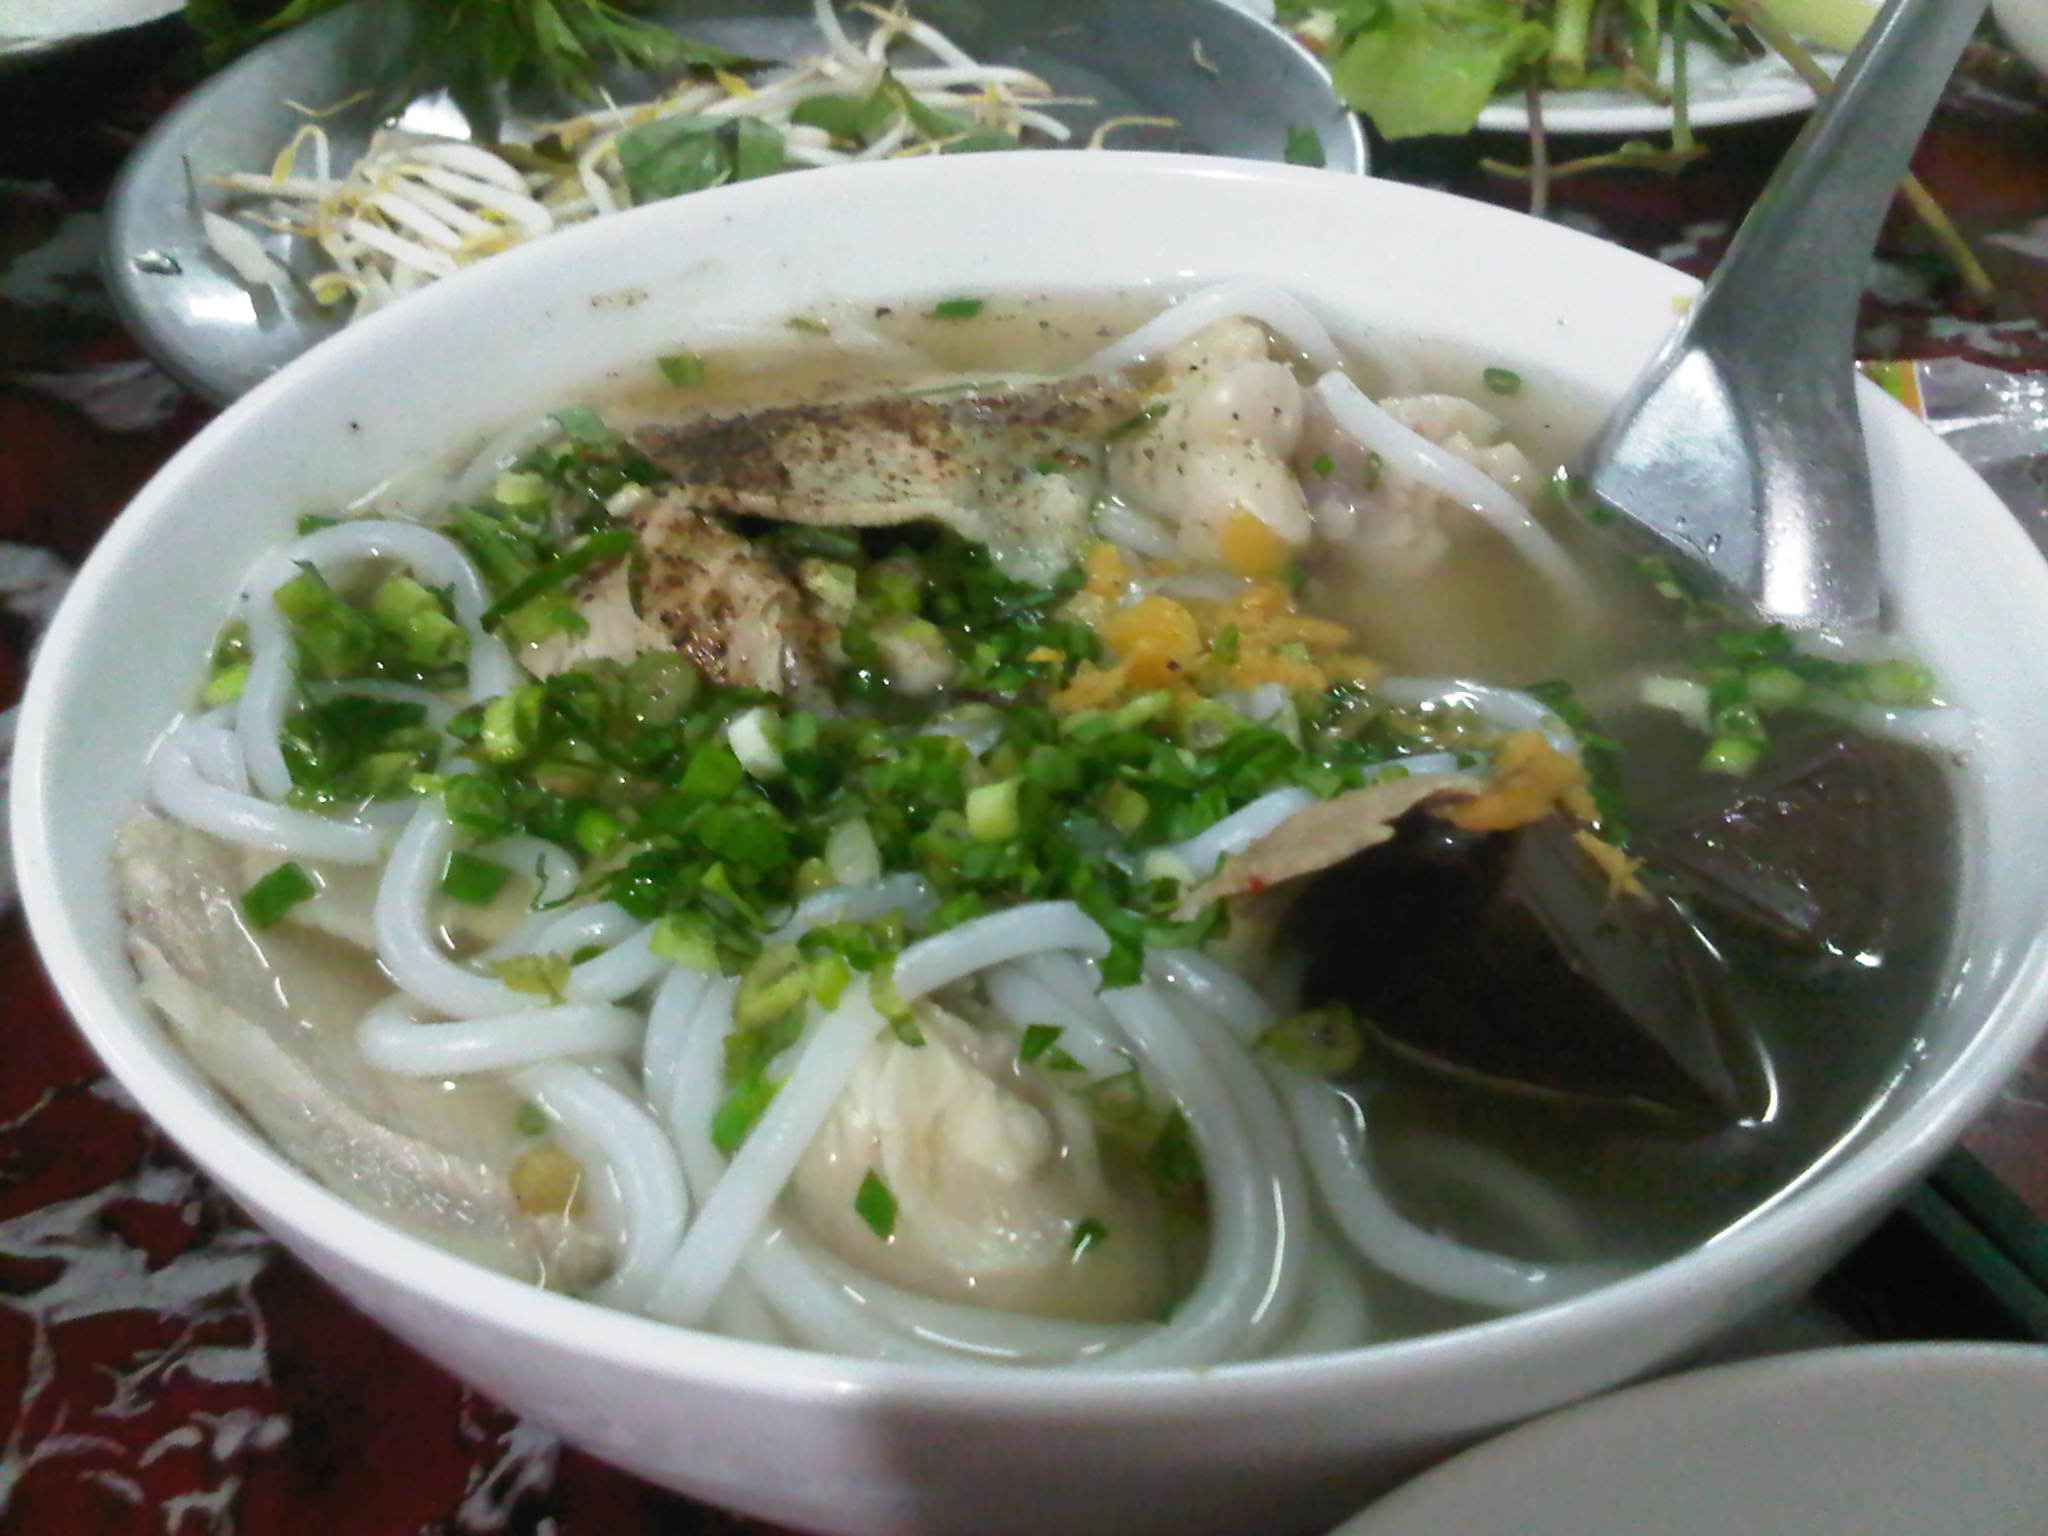 A Tay Ninh noodle specific - Trang Bang soup cake